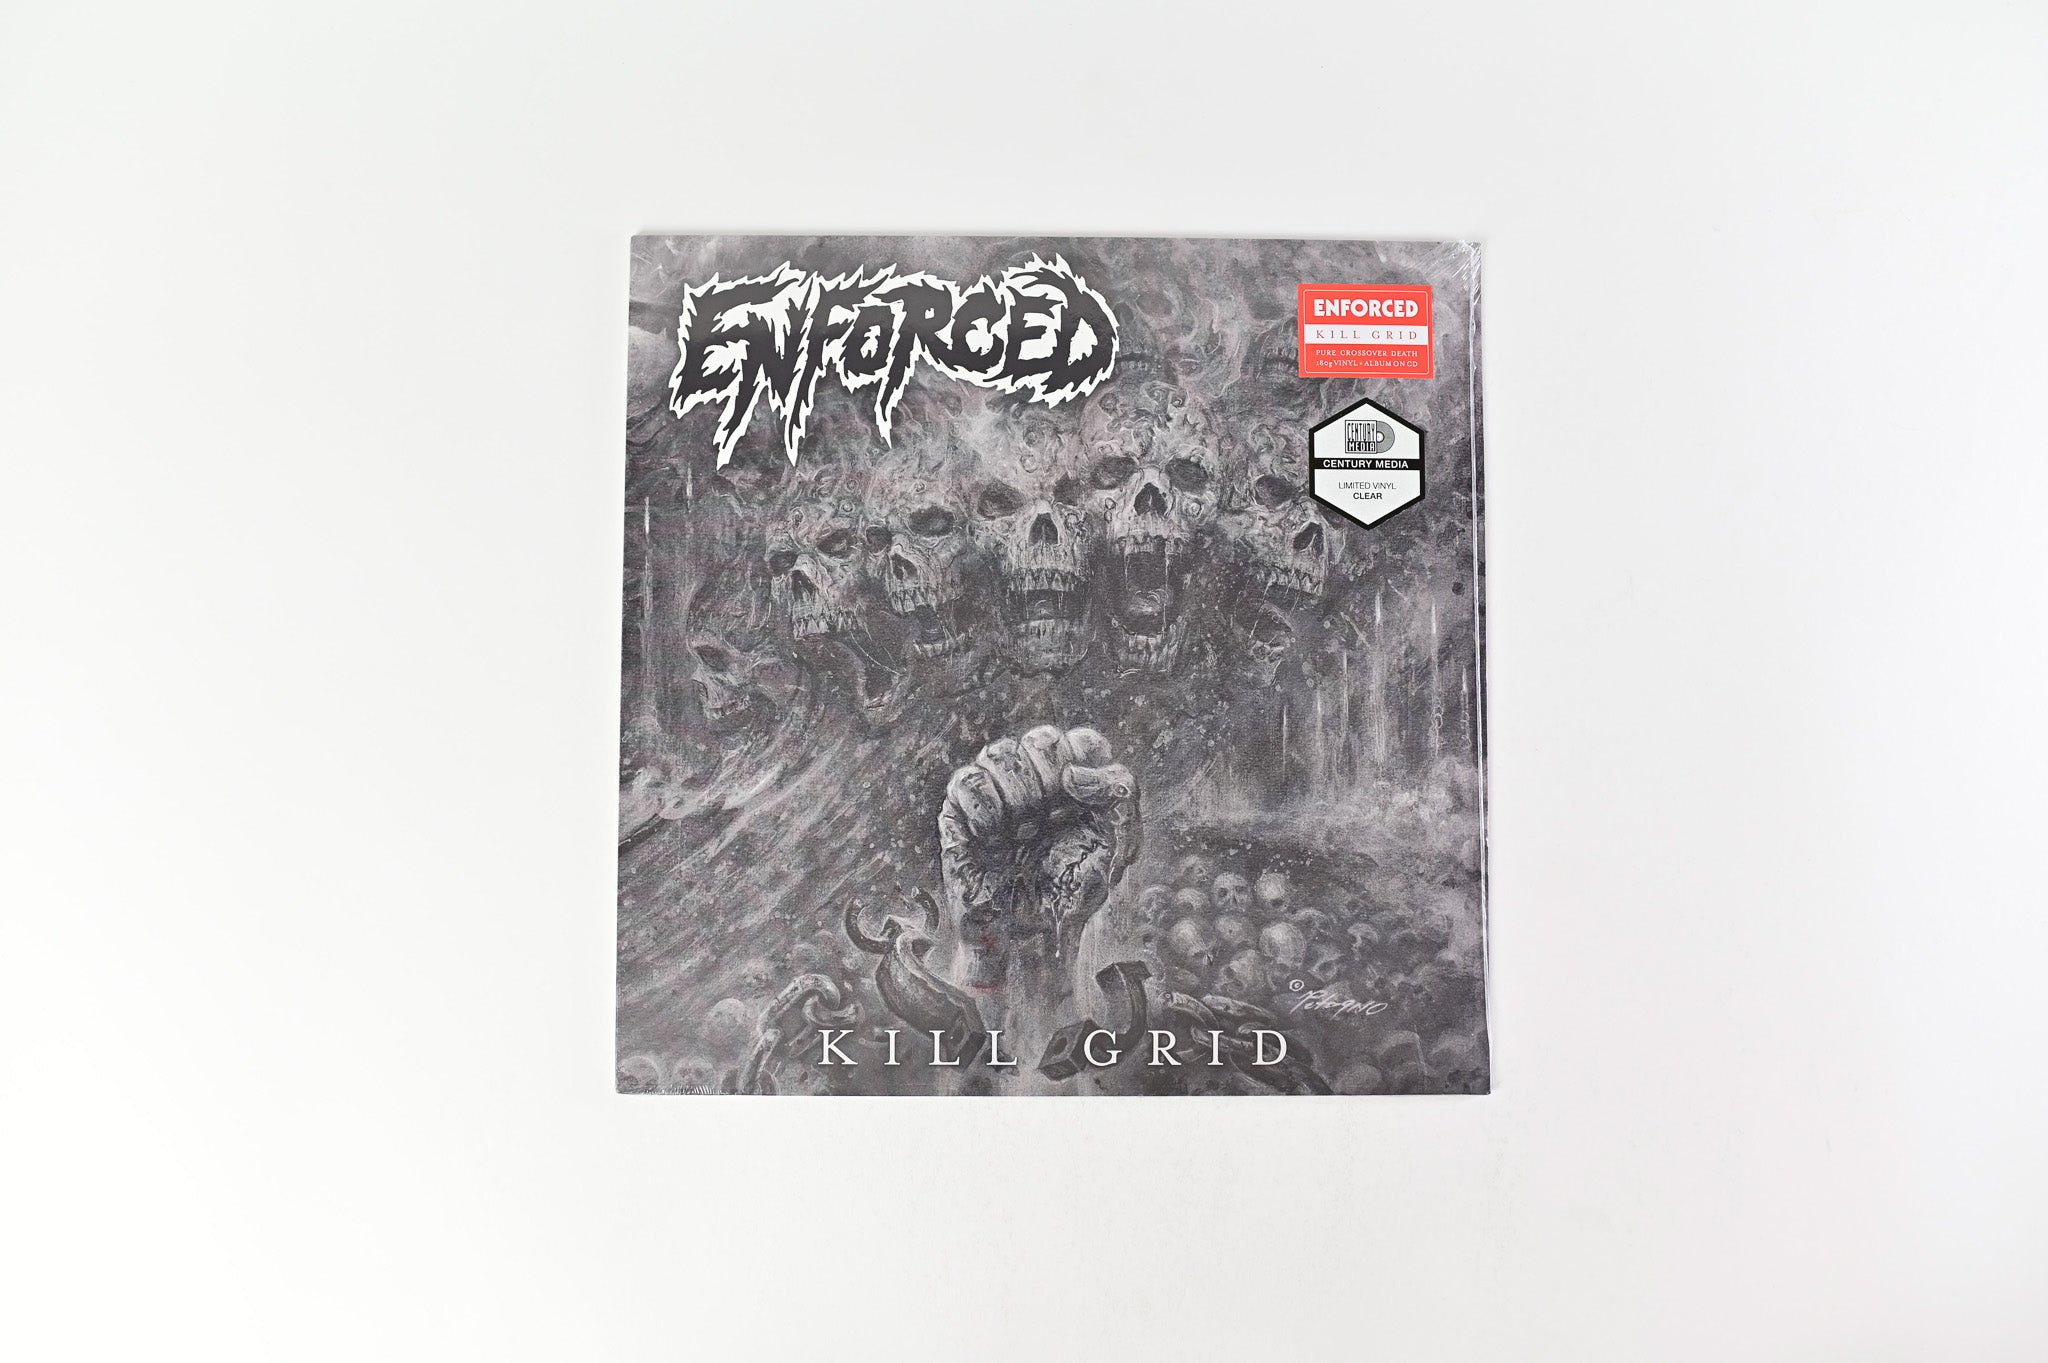 Enforced - Kill Grid on Century Media Ltd Clear Vinyl Sealed